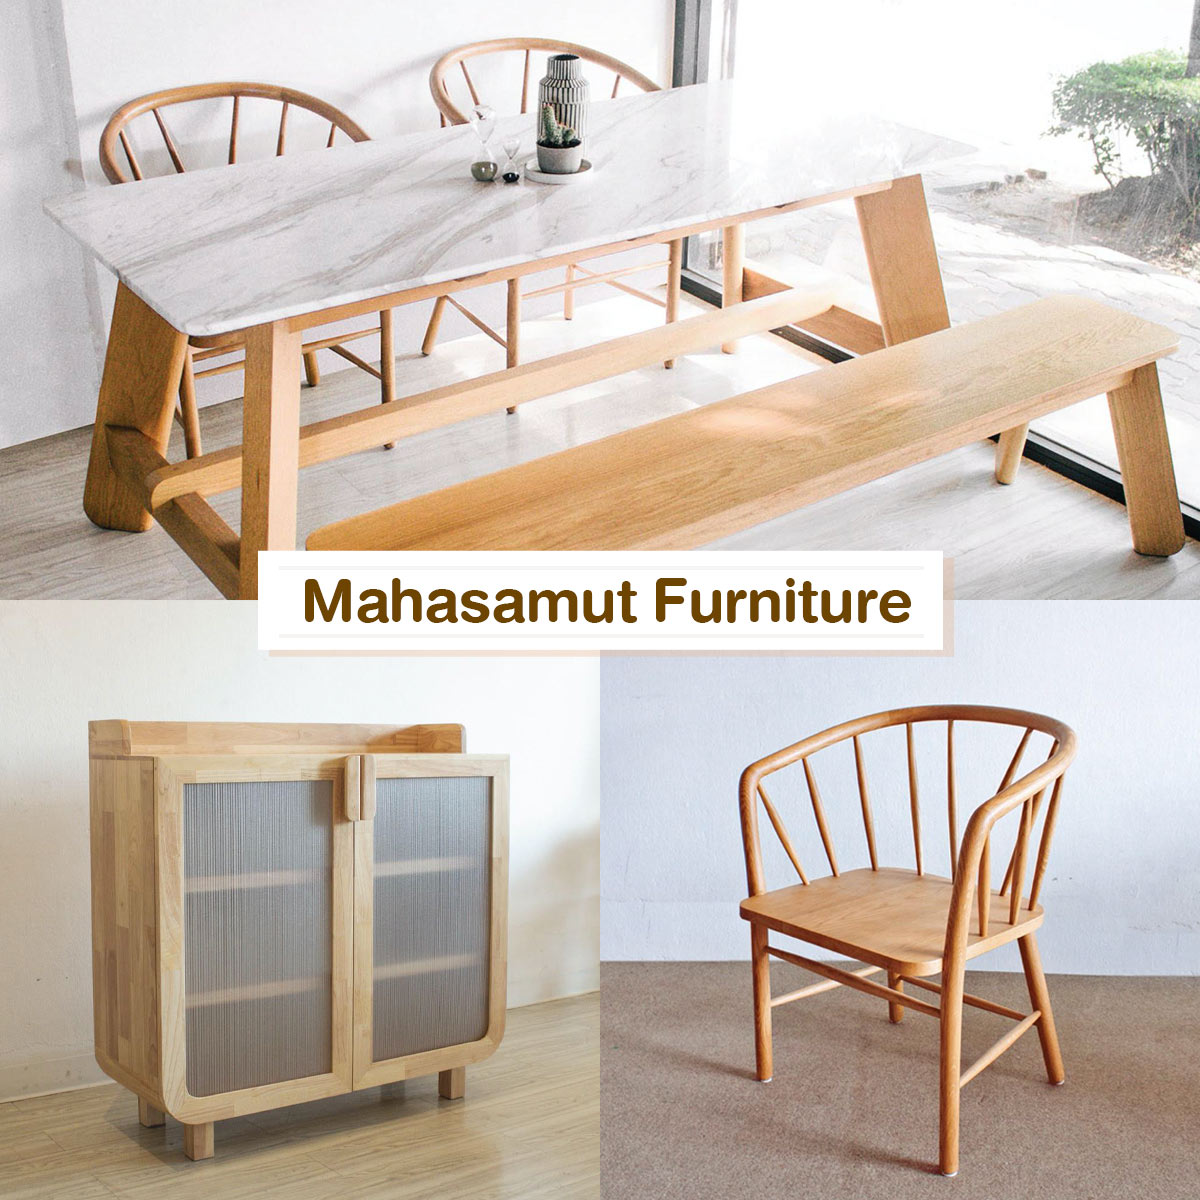 Mahasamut Furniture